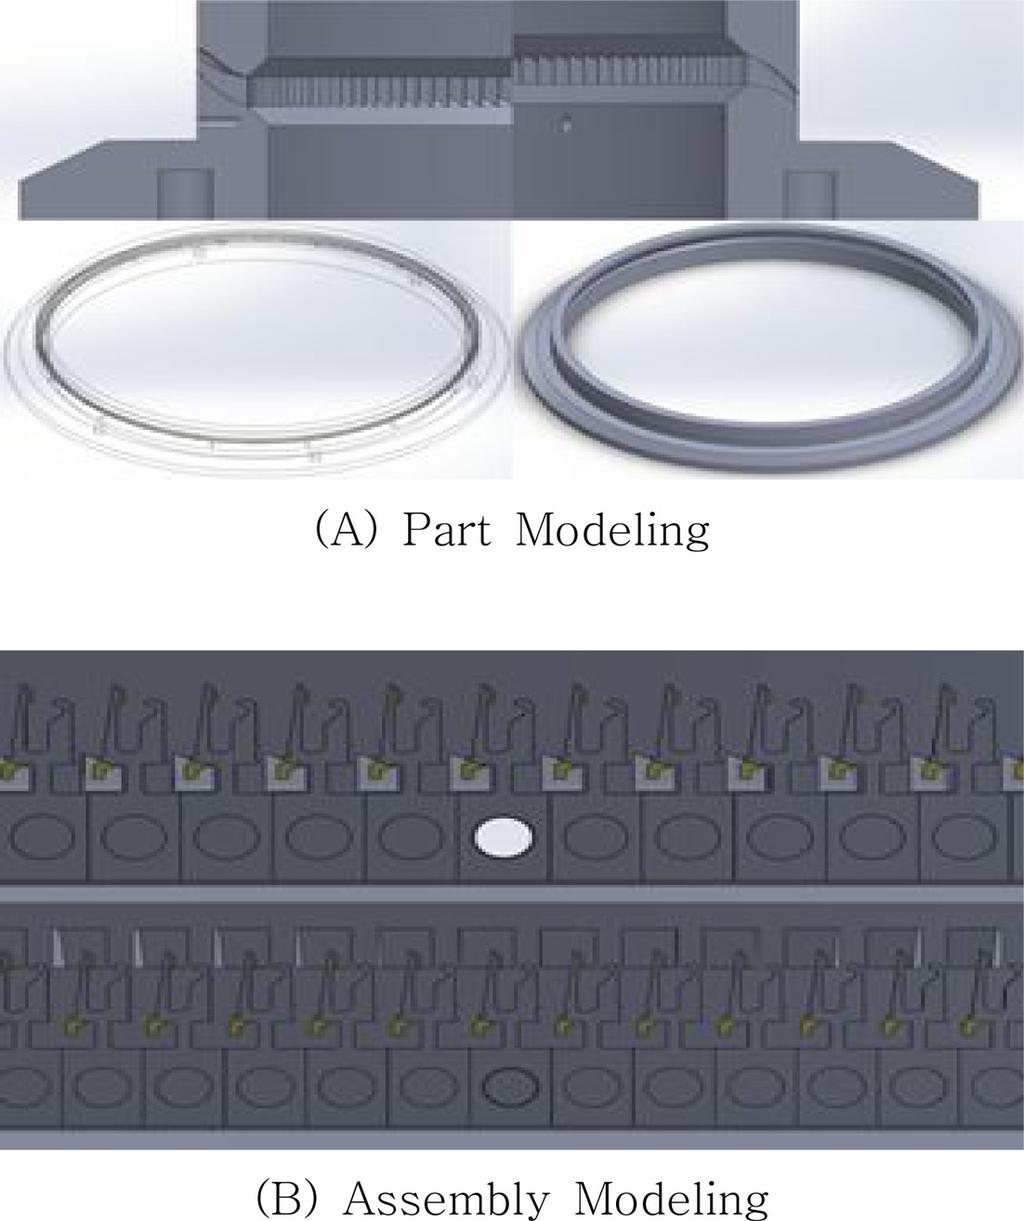 Table 3은 ABS의물성치를제시하였다. FDM(Fused Deposition Modeling) 방식은고체나액체의필라멘트를녹여노즐에서분사하여적층하는 3D 프린팅방식이다.